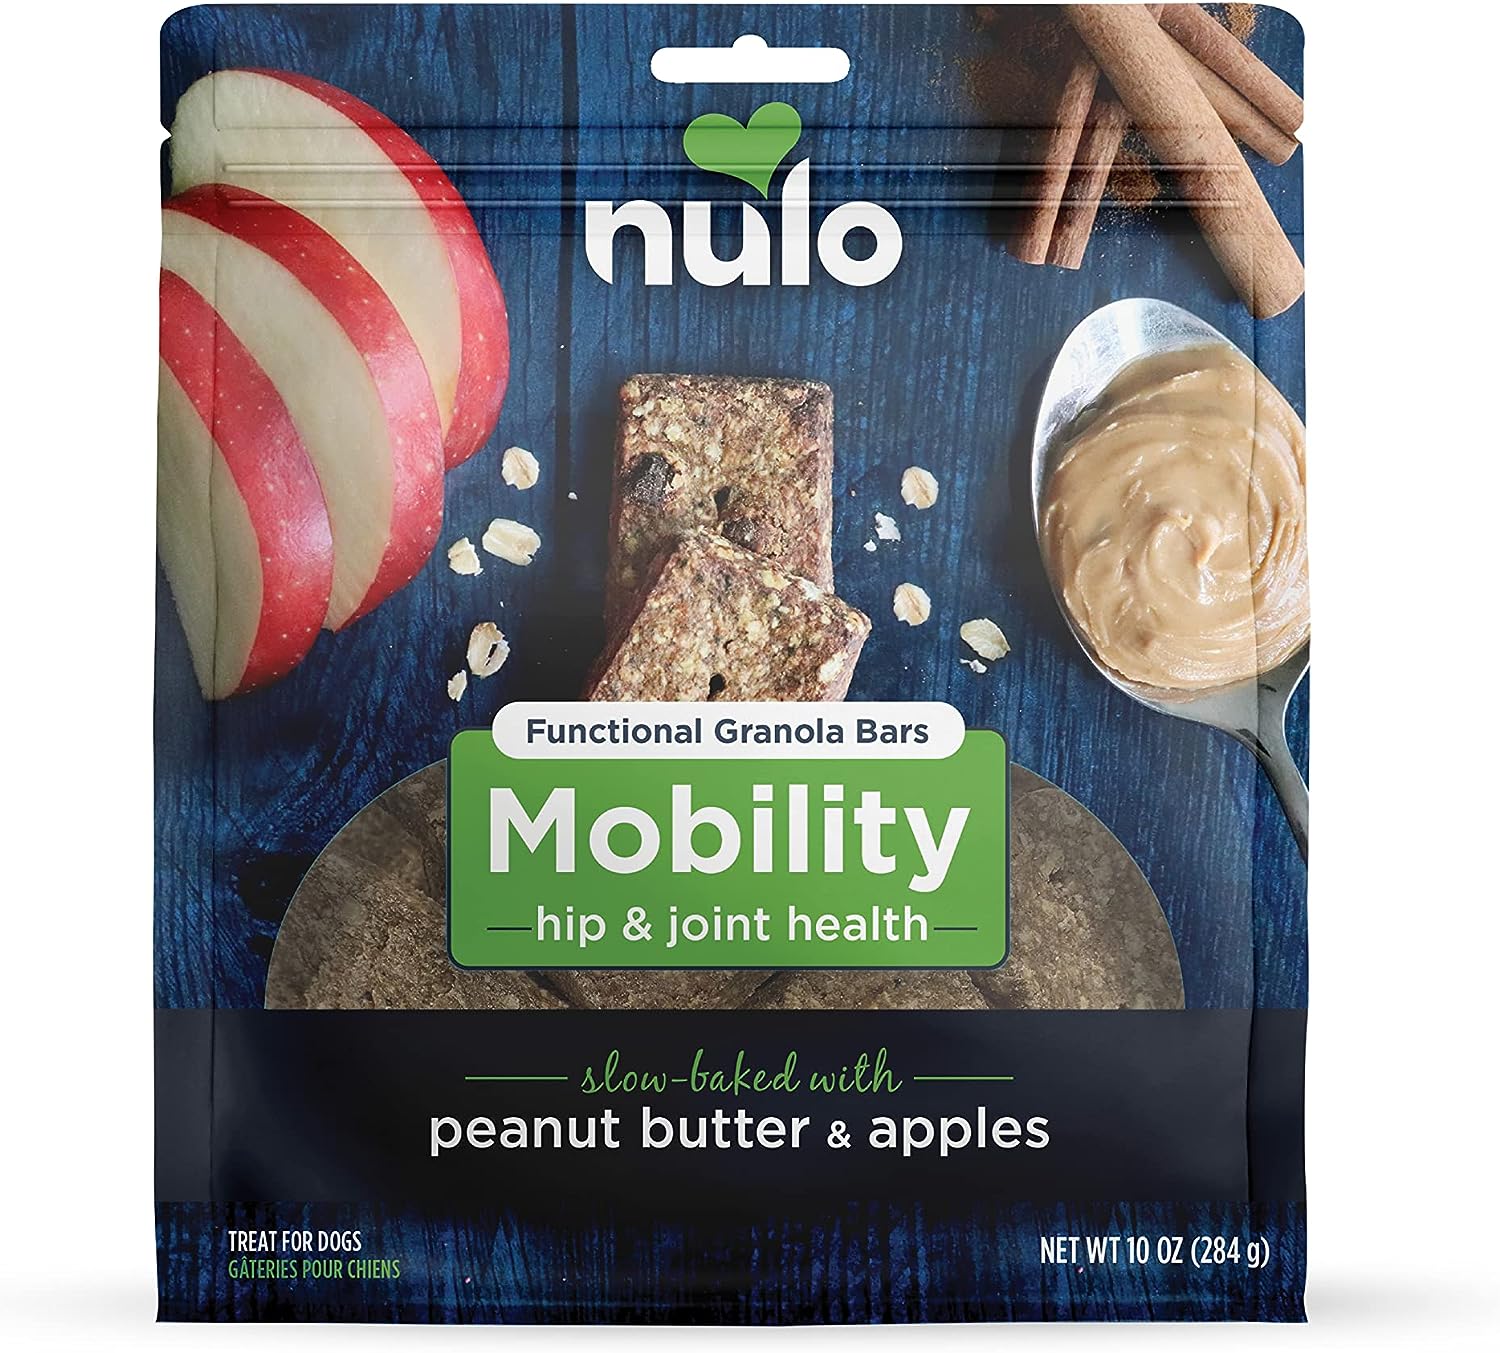 Nulo Functional Granola Mobility Dog Treats